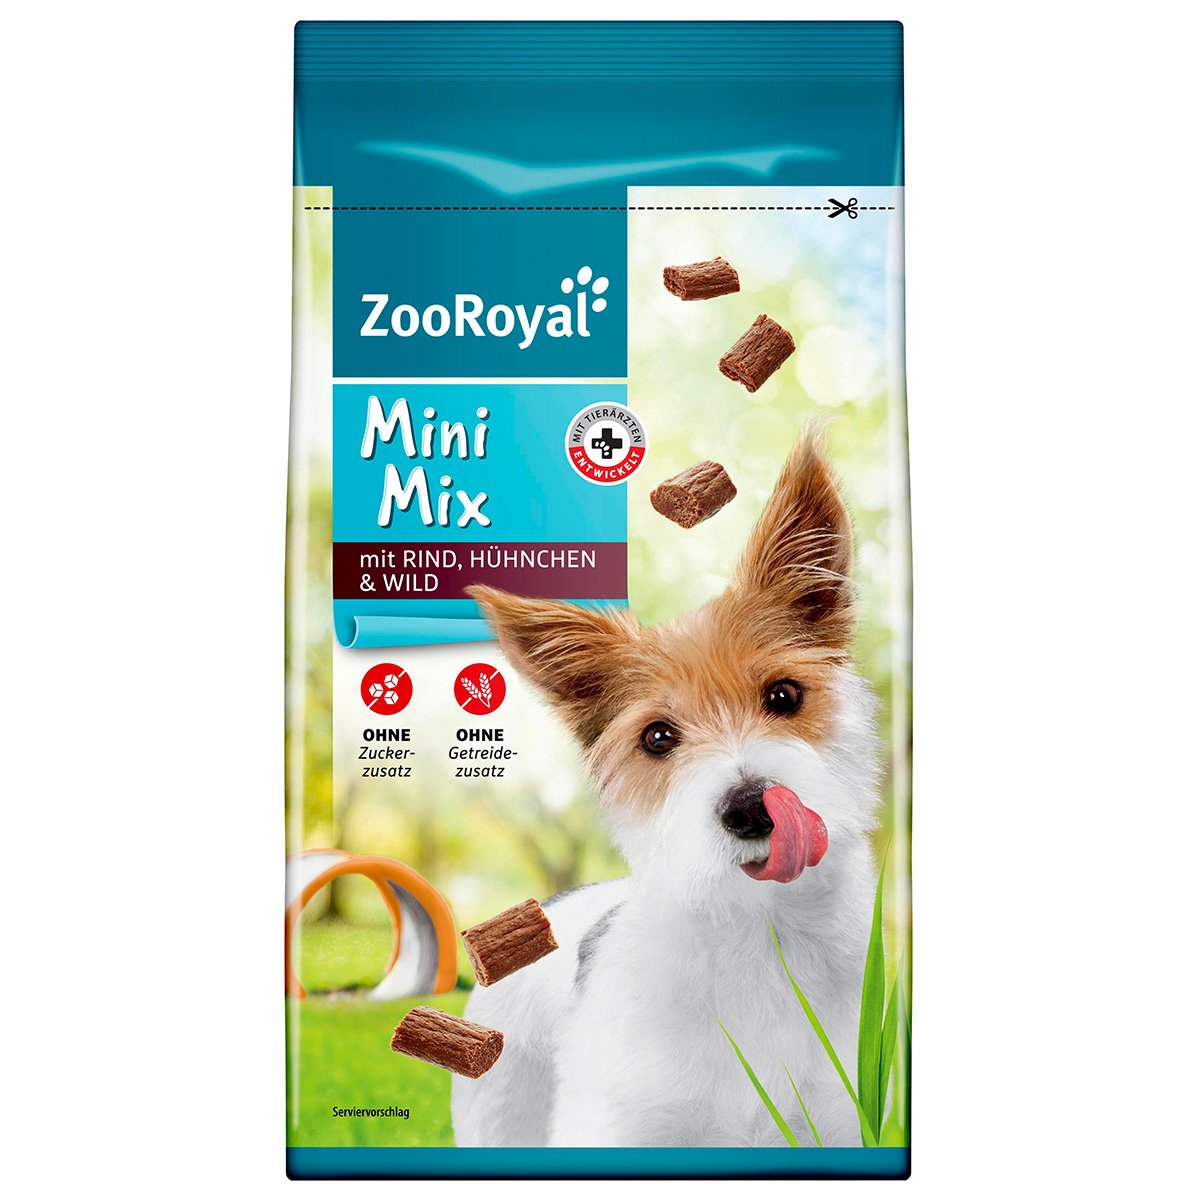 ZooRoyal Mini Mix Snacks